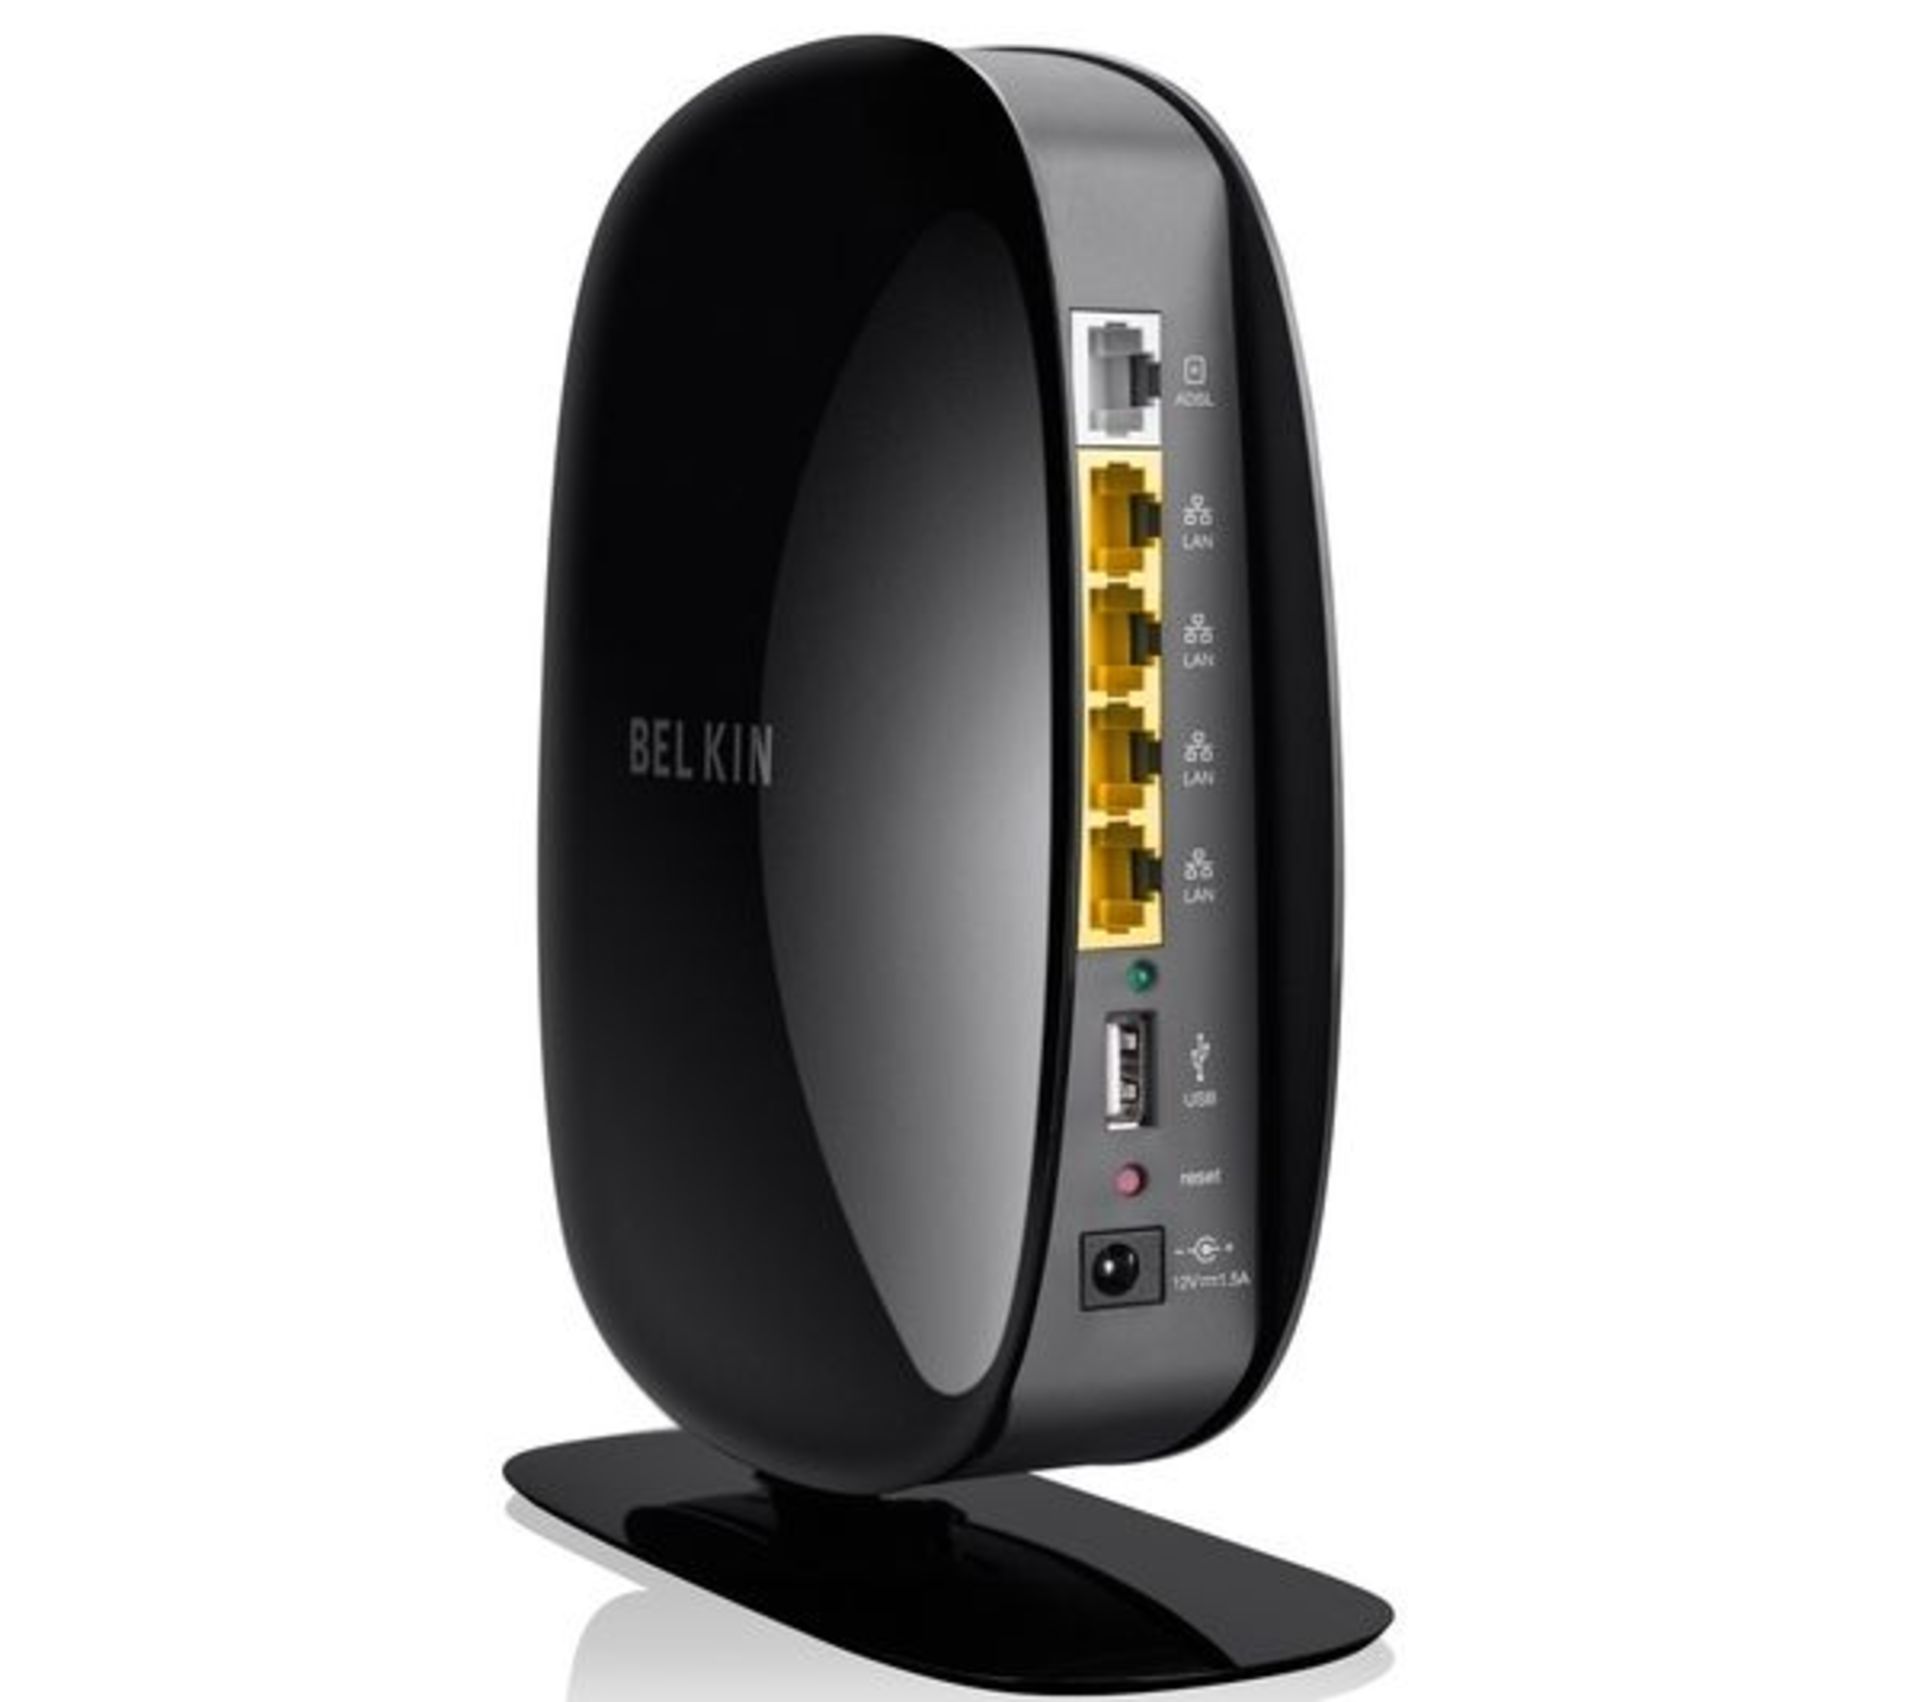 + VAT Brand New Belkin N300 Wireless Modem Router - Easy set Up - WPA/WPA2/WEP Encryption - 4 port